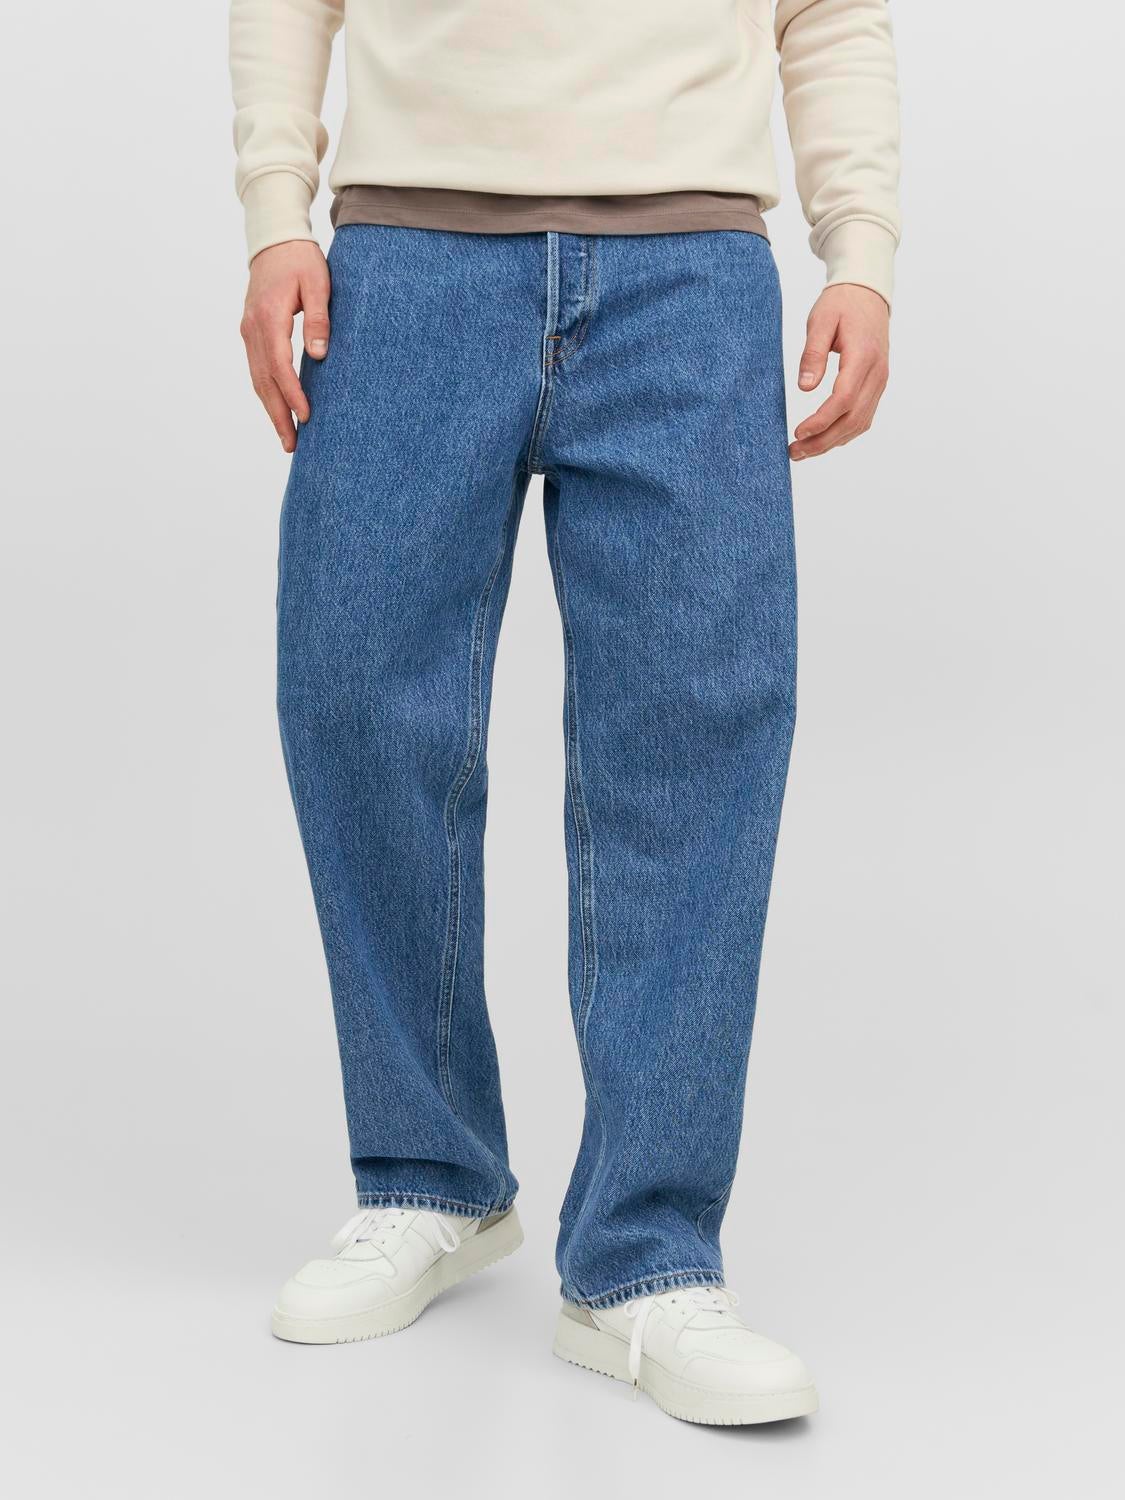 JACK & JONES JEANS INTELLIGENCE slim fit jeans tim original blue denim